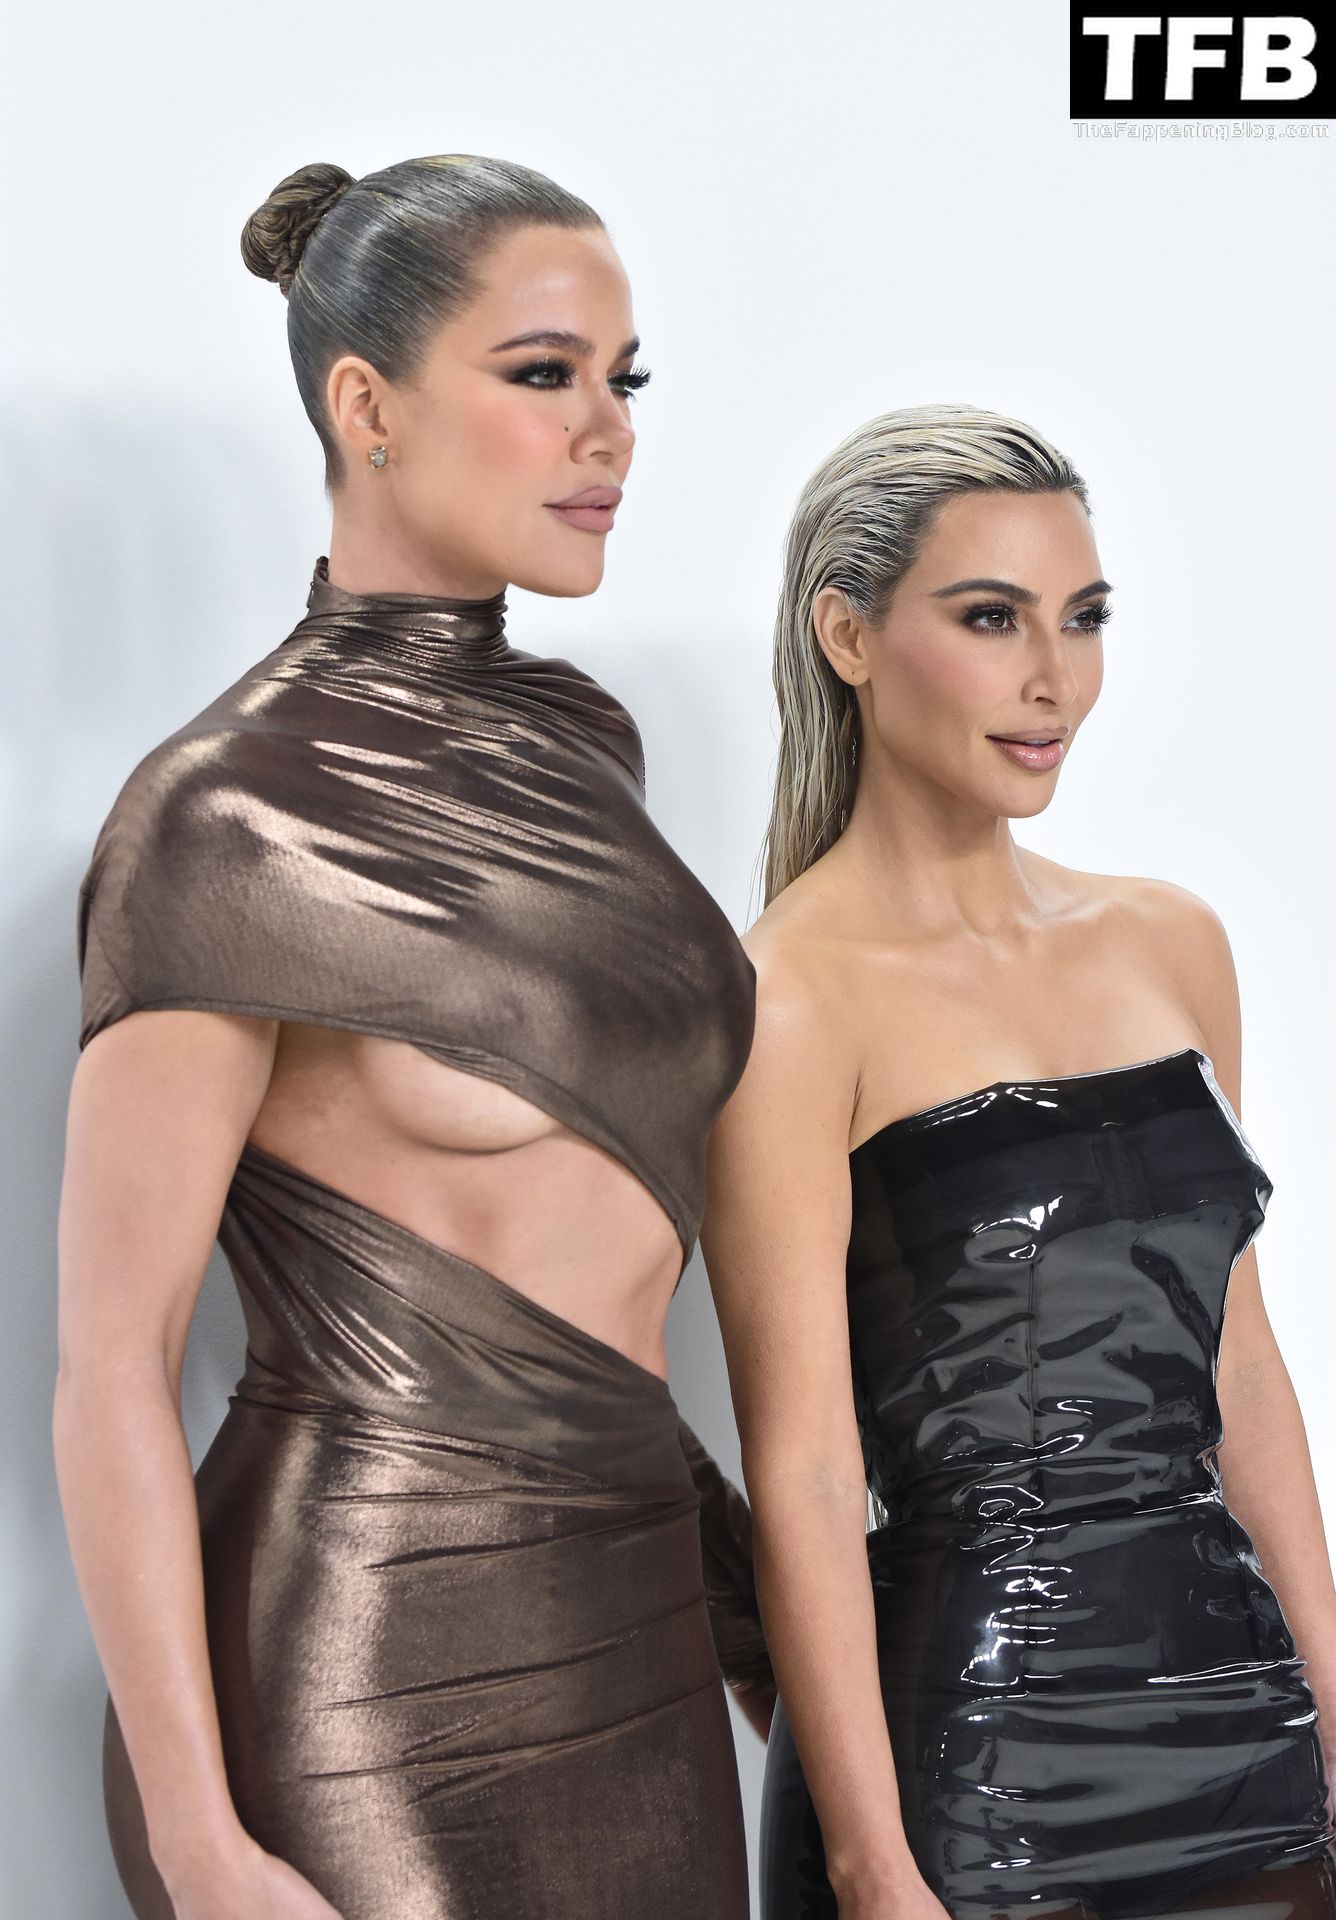 Khloe Kardashian Sexy Tits The Fappening Blog 67 - Khloe Kardashian Shows Off Her Underboob at the 2022 CFDA Fashion Awards (110 Photos)